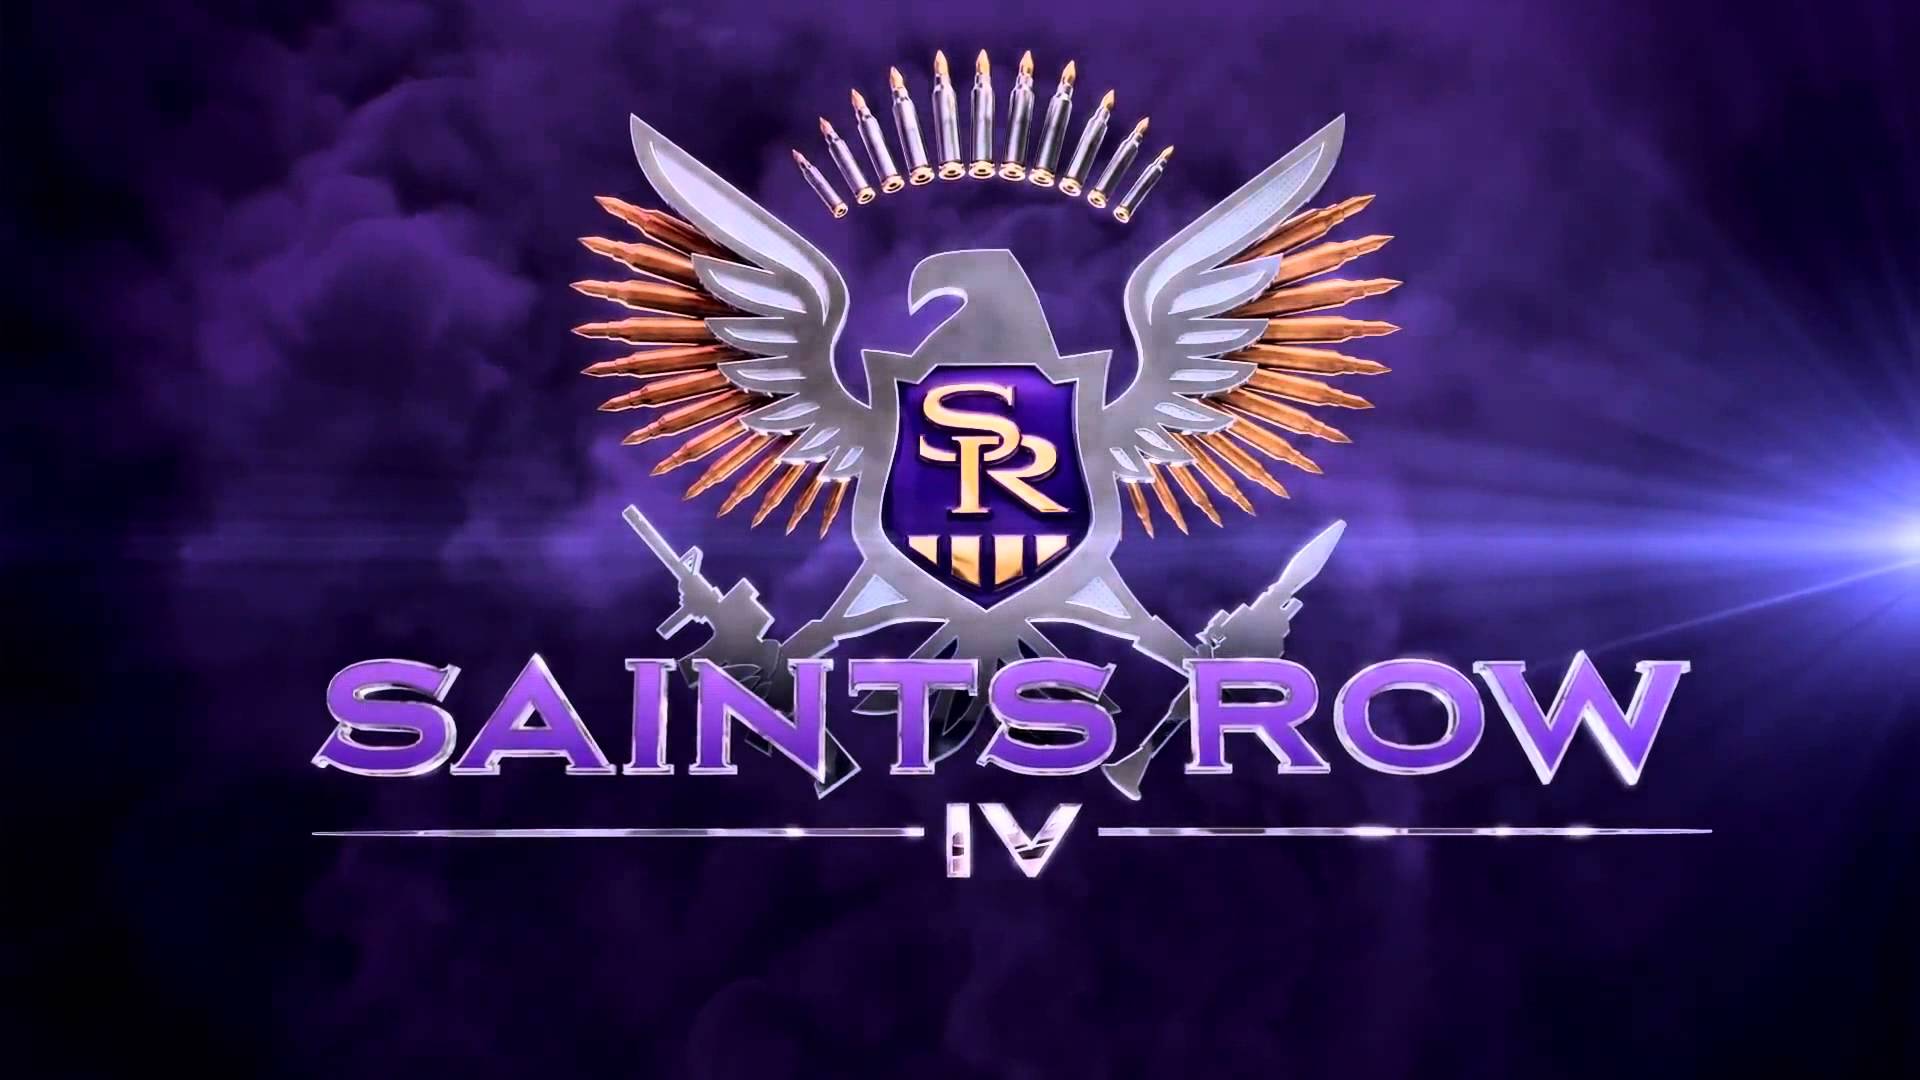 Saints row 4 pc game download utorrent